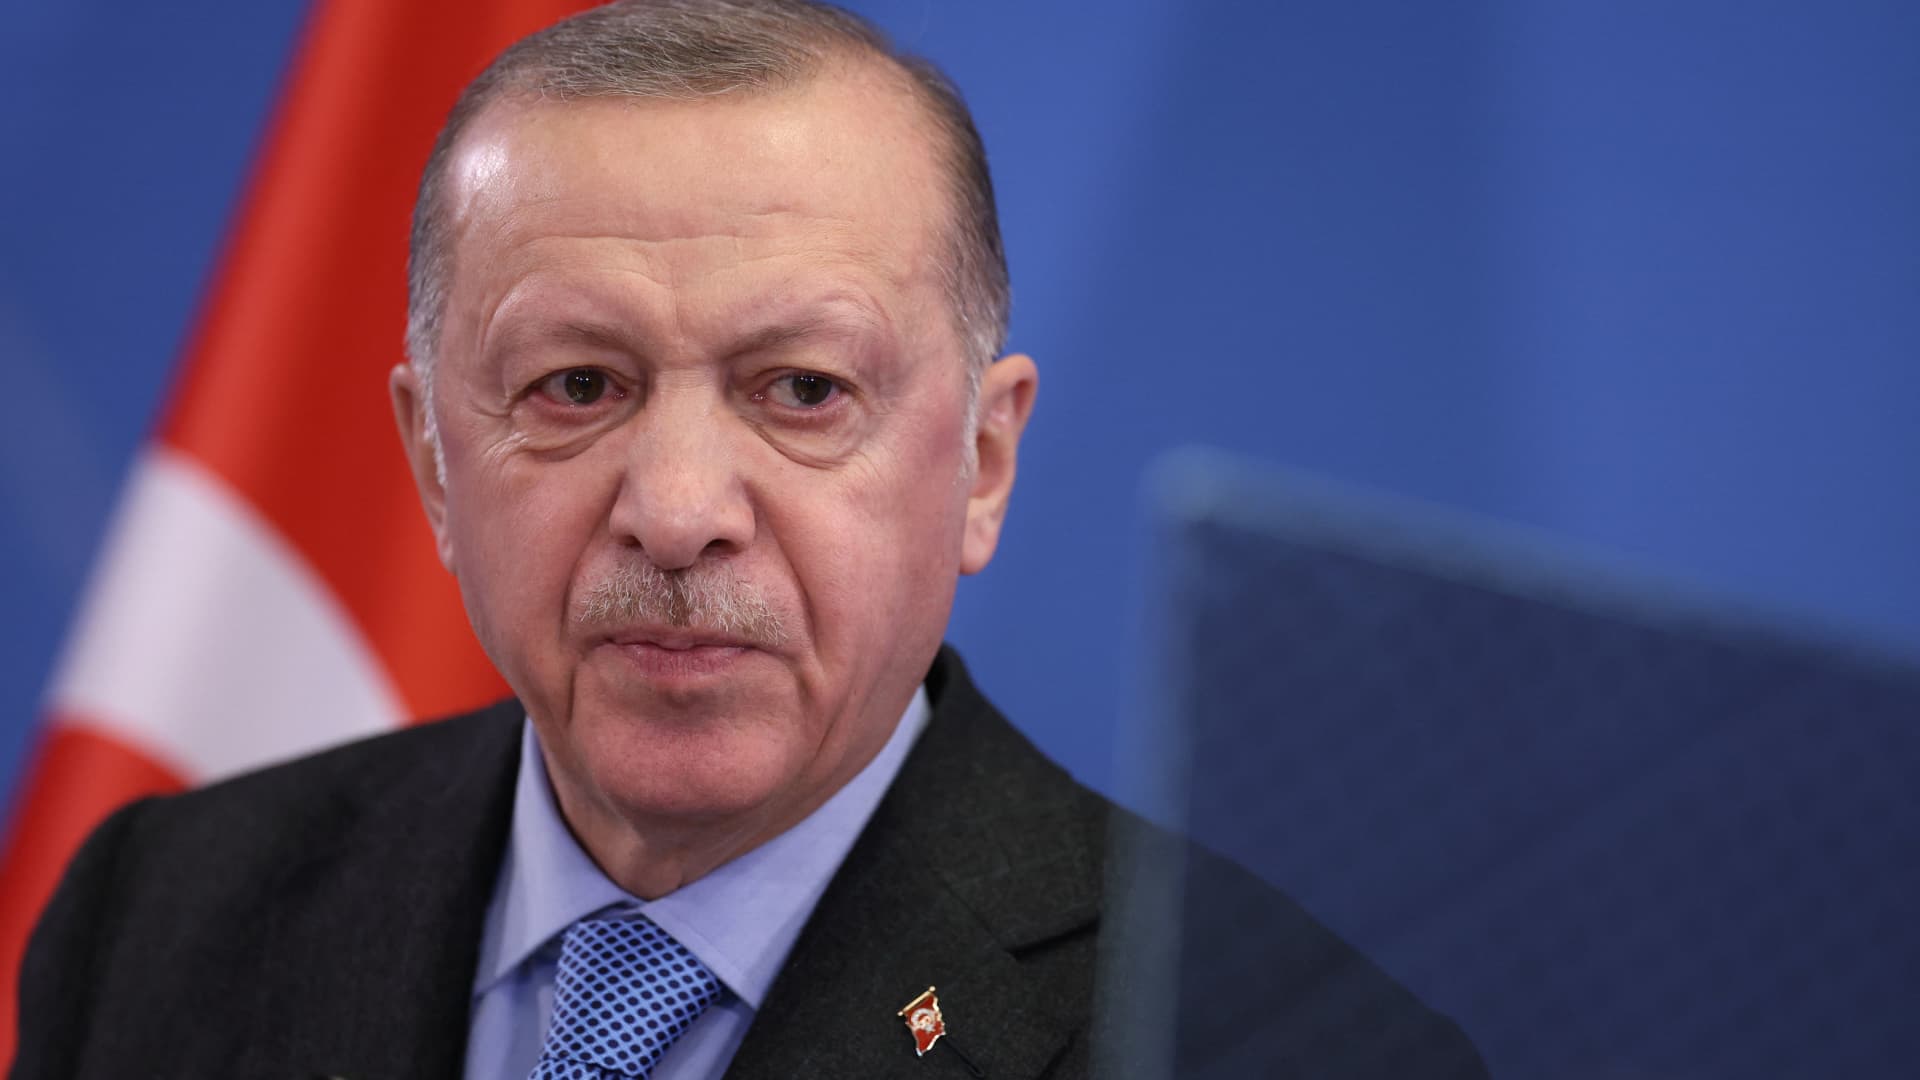 Erdogan’s push for Turkey’s EU membership is being met with surprise and skepticism